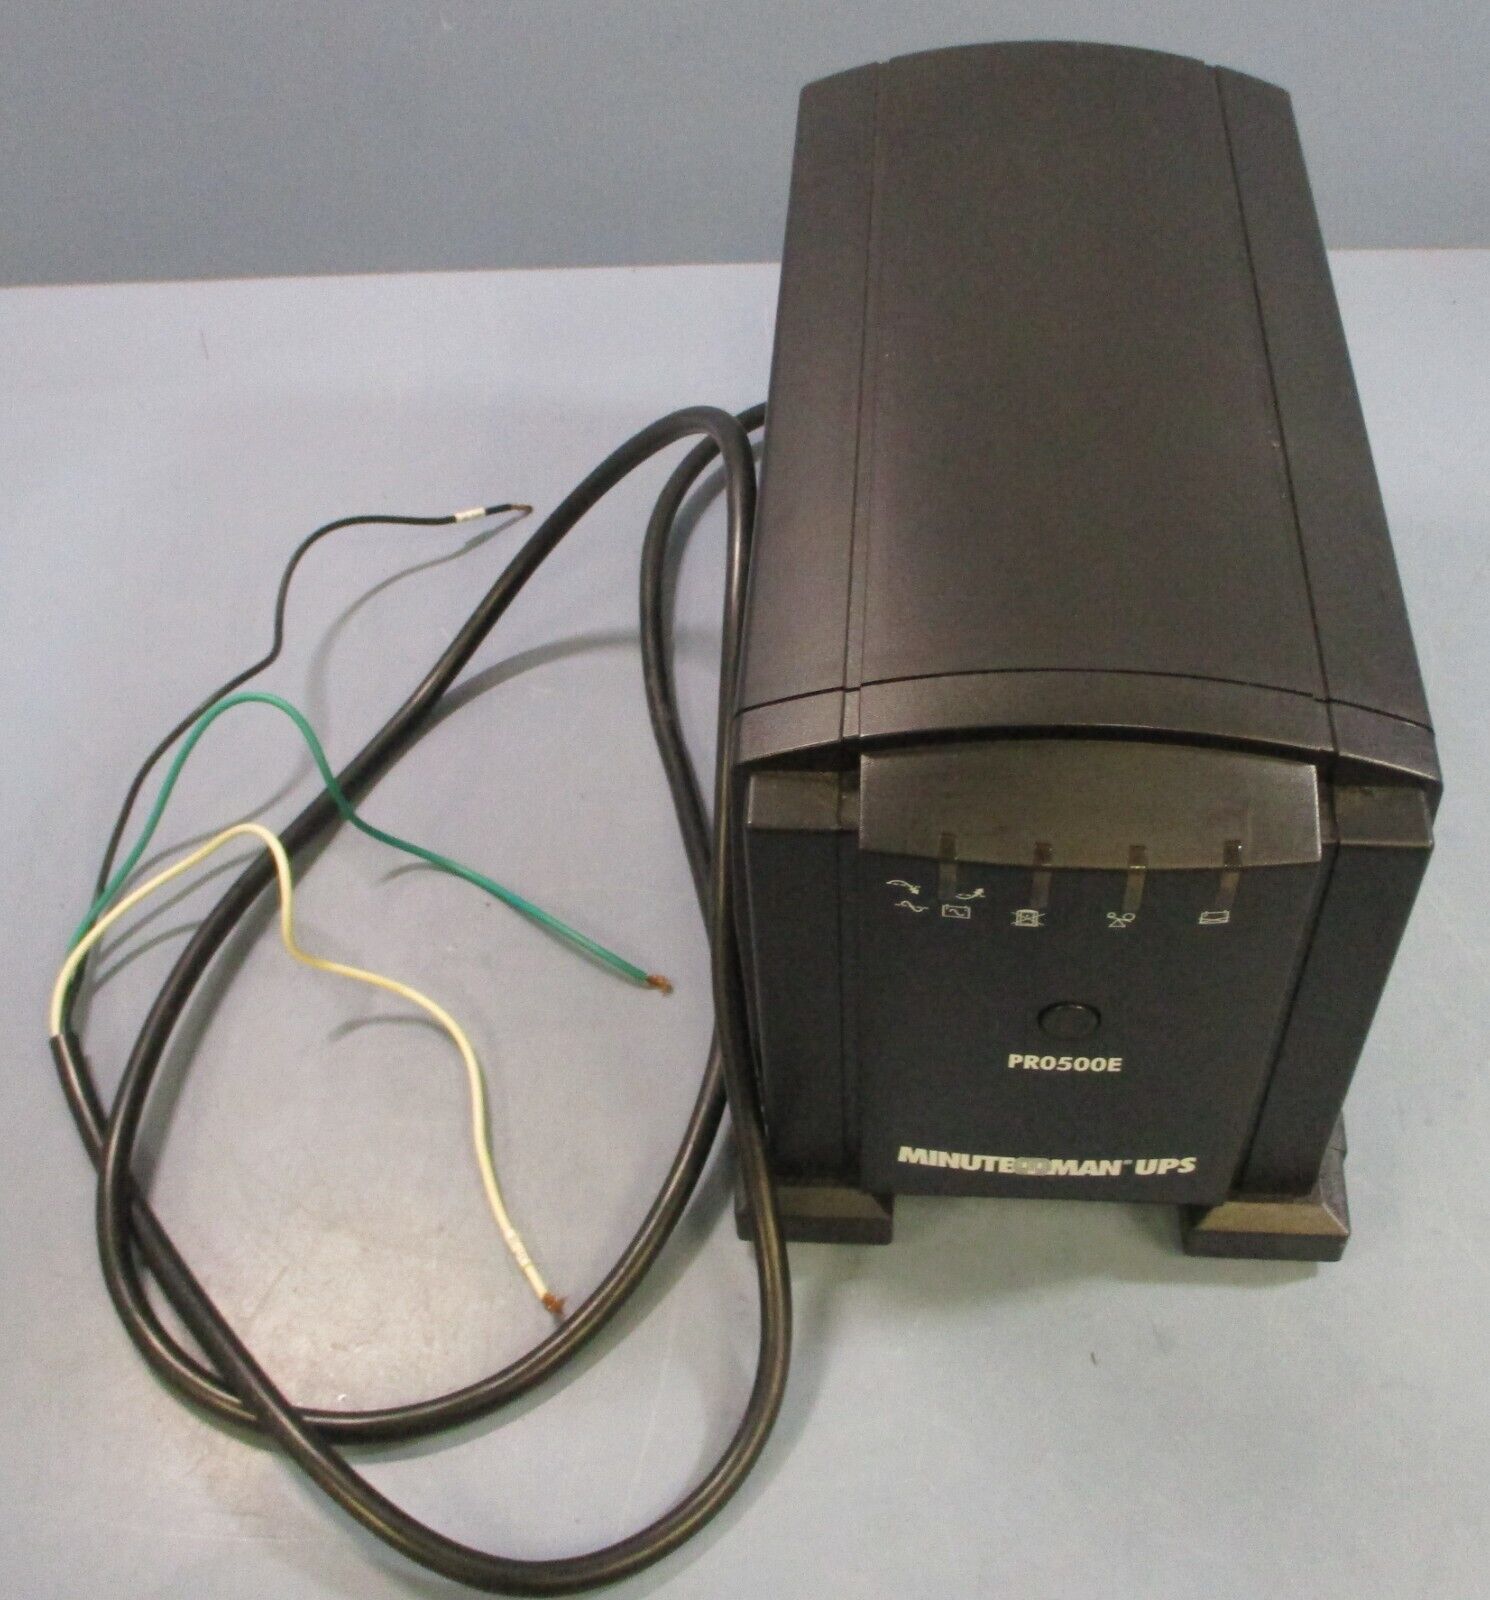 Minuteman Pro500E Uninterruptible Power Supply 90000605 120V 12A 6 Outlets